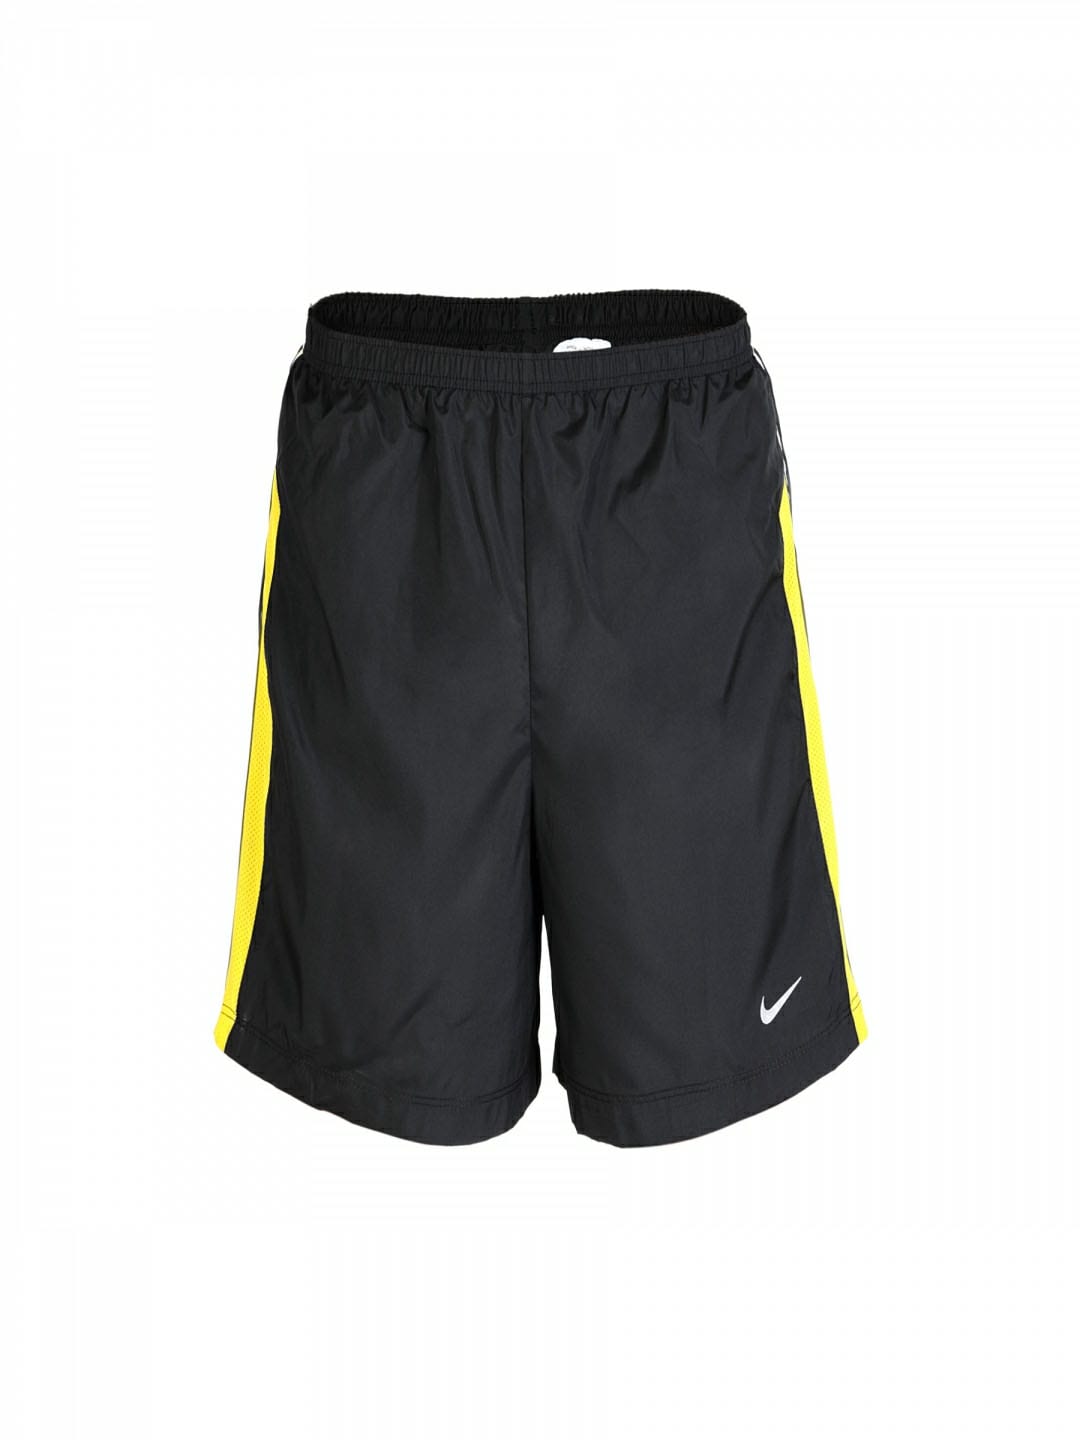 Nike Men Black Reflective Shorts